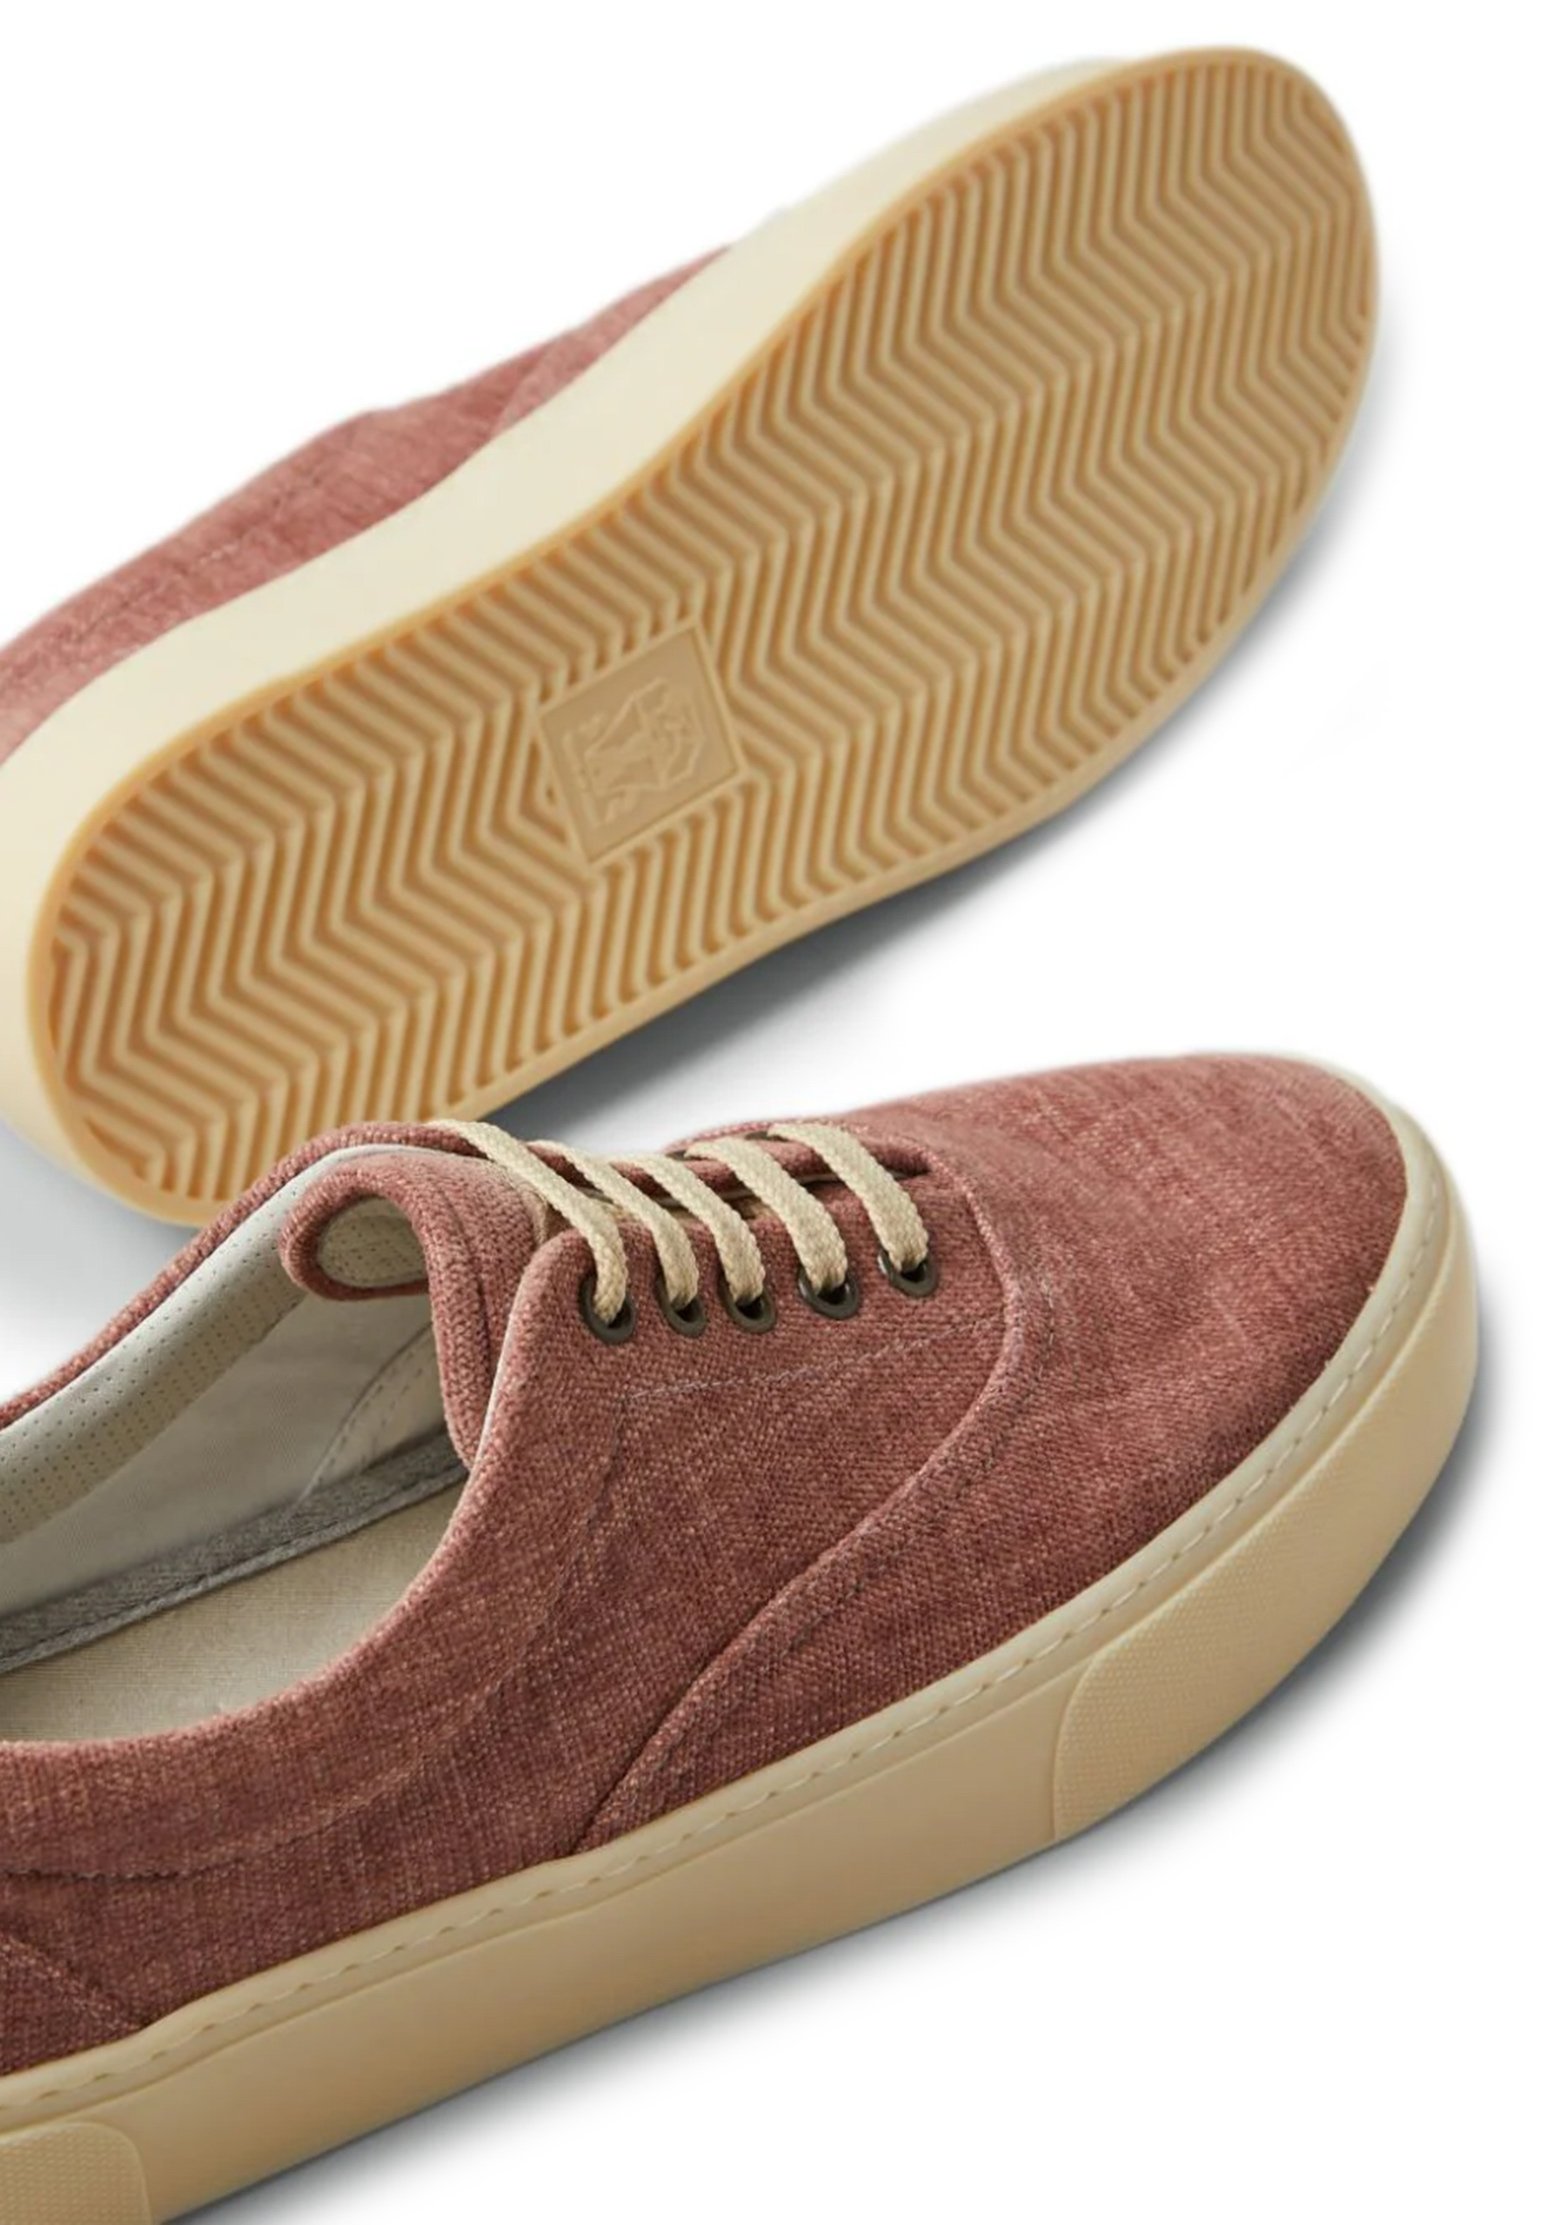 Sneakers BRUNELLO CUCINELLI Color: brown (Code: 3491) in online store Allure